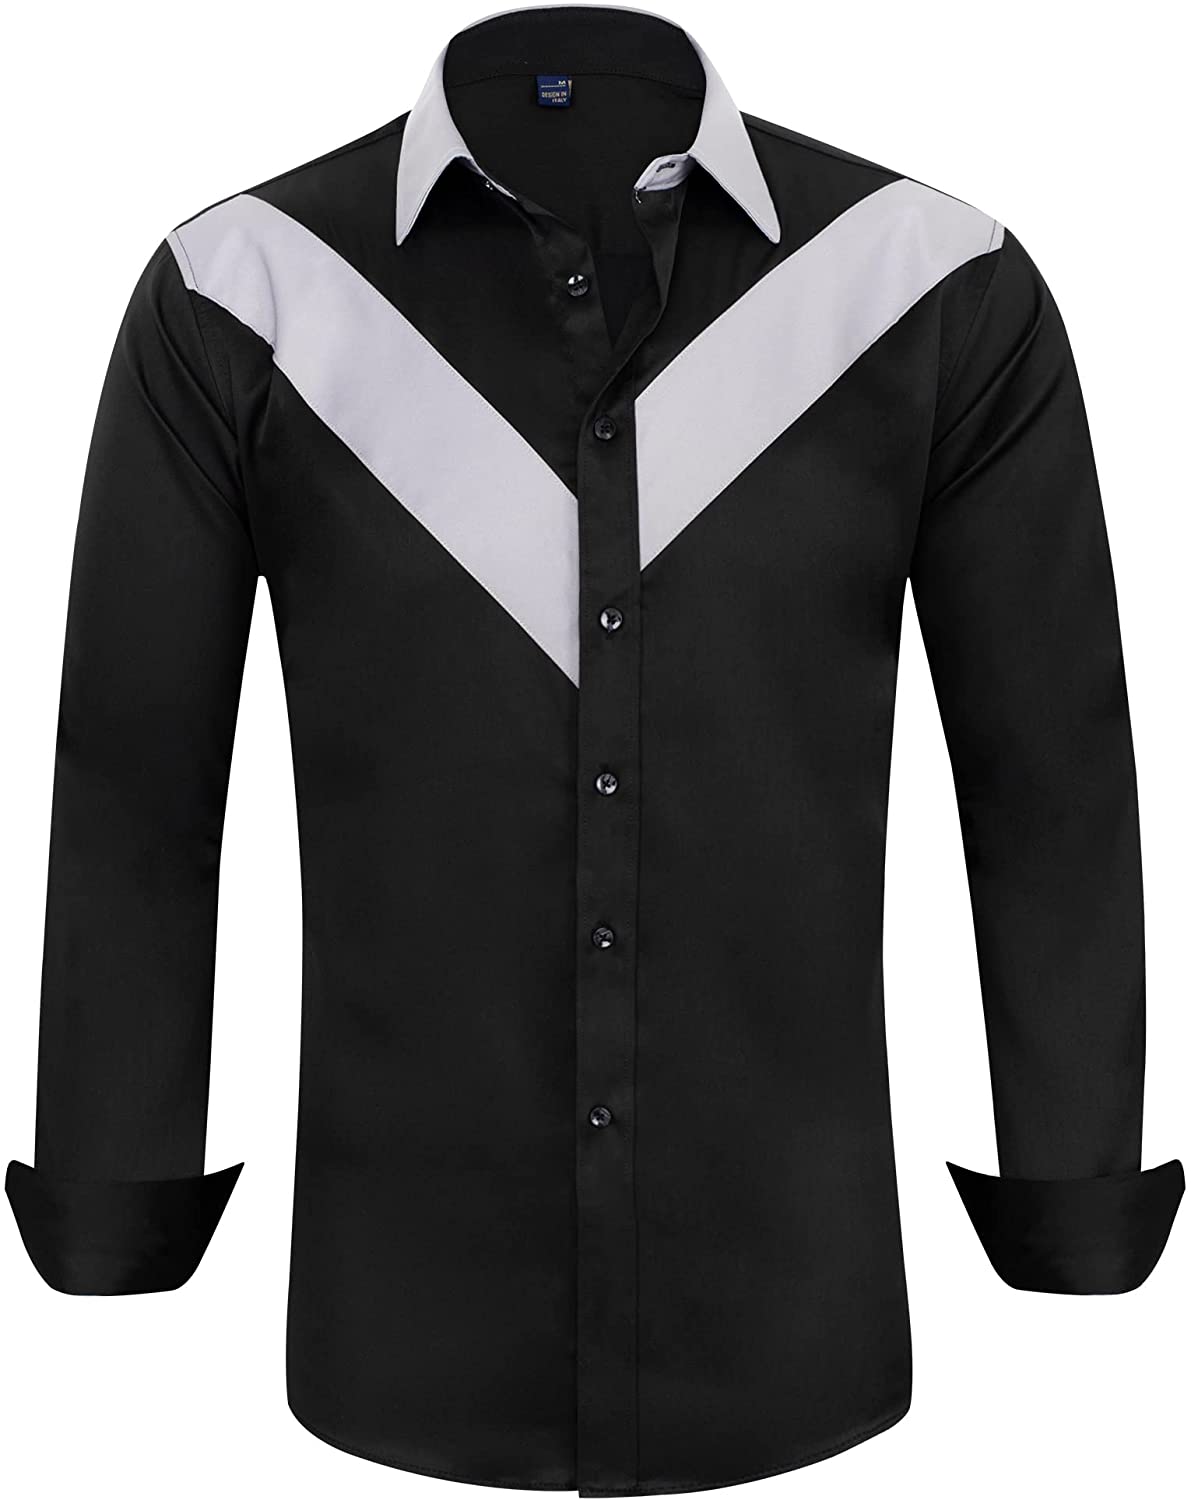 Alimens & Gentle Mens Dress Shirts Long Sleeve Wrinkle-Resistant Regular Fit Casual Shirt 